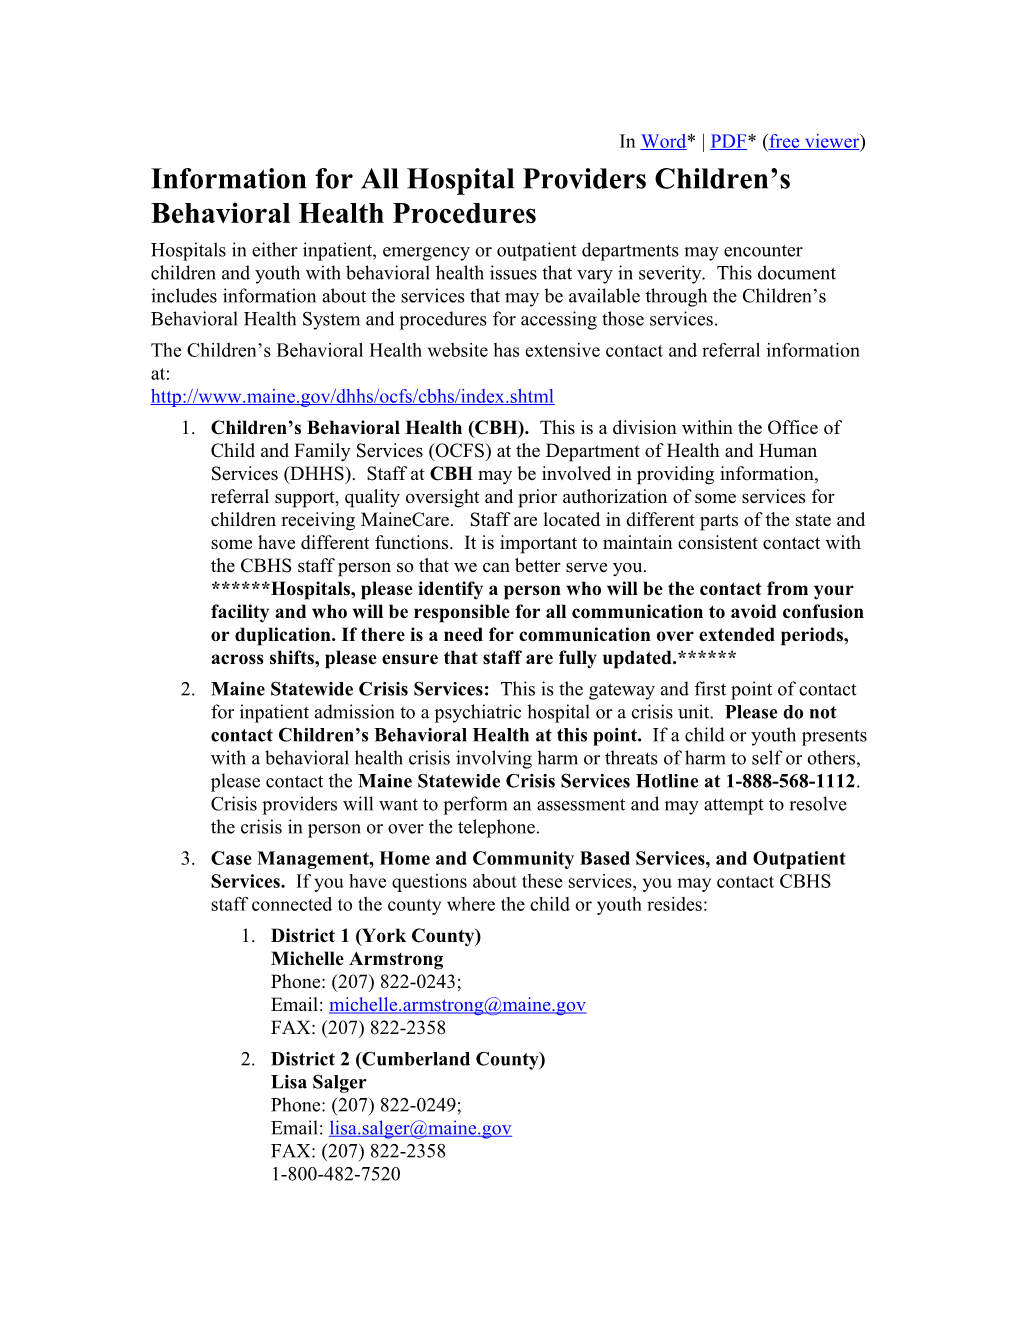 Information for All Hospital Providers Children S Behavioral Health Procedures